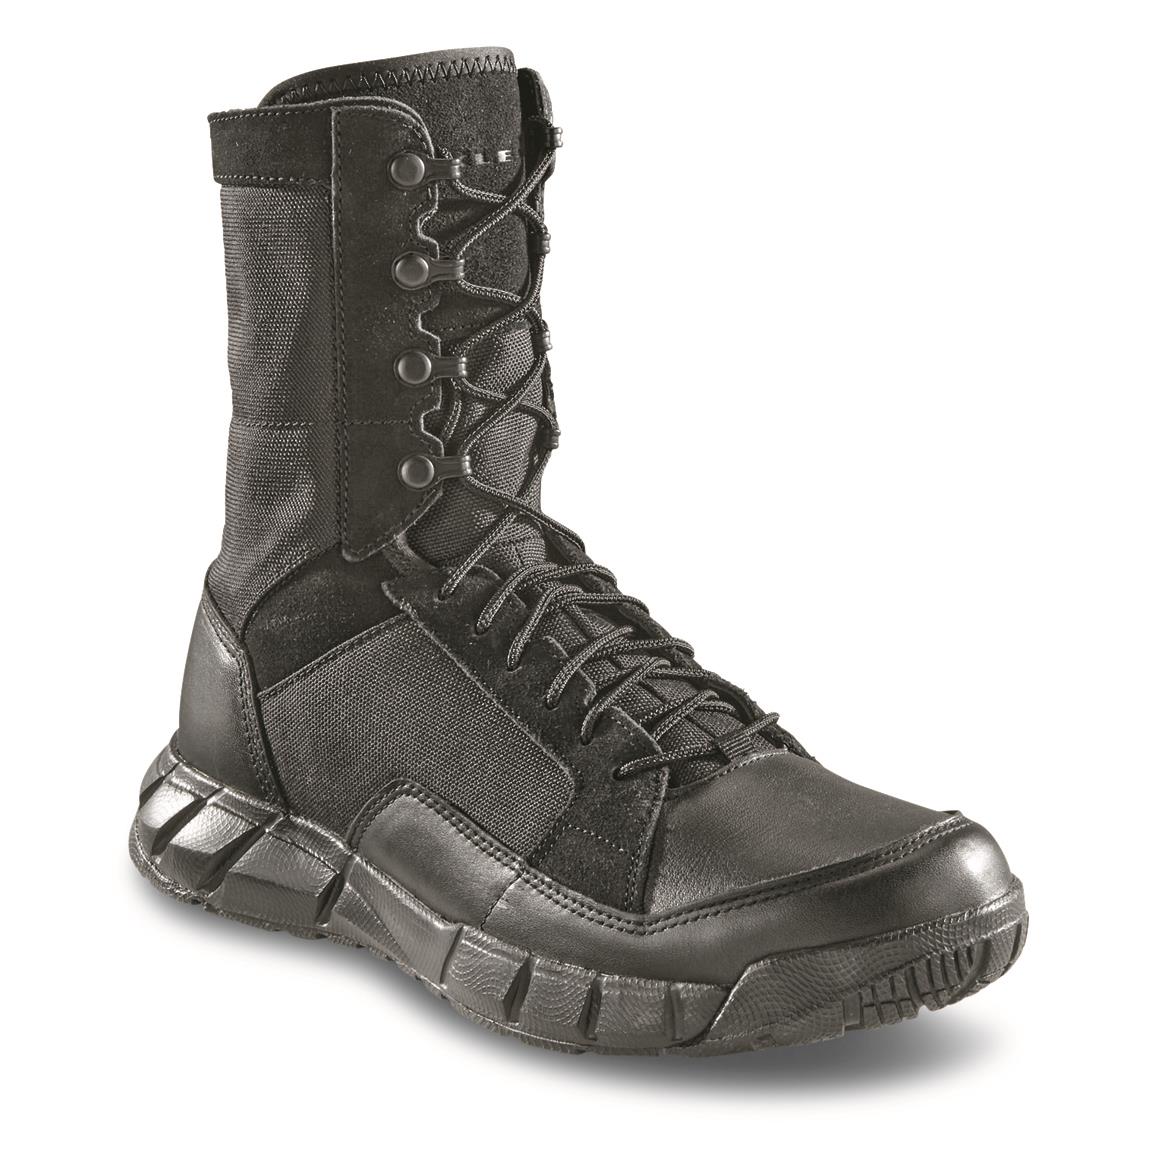 Oakley Men's SI Light Patrol 8" Tactical Boots, Blackout